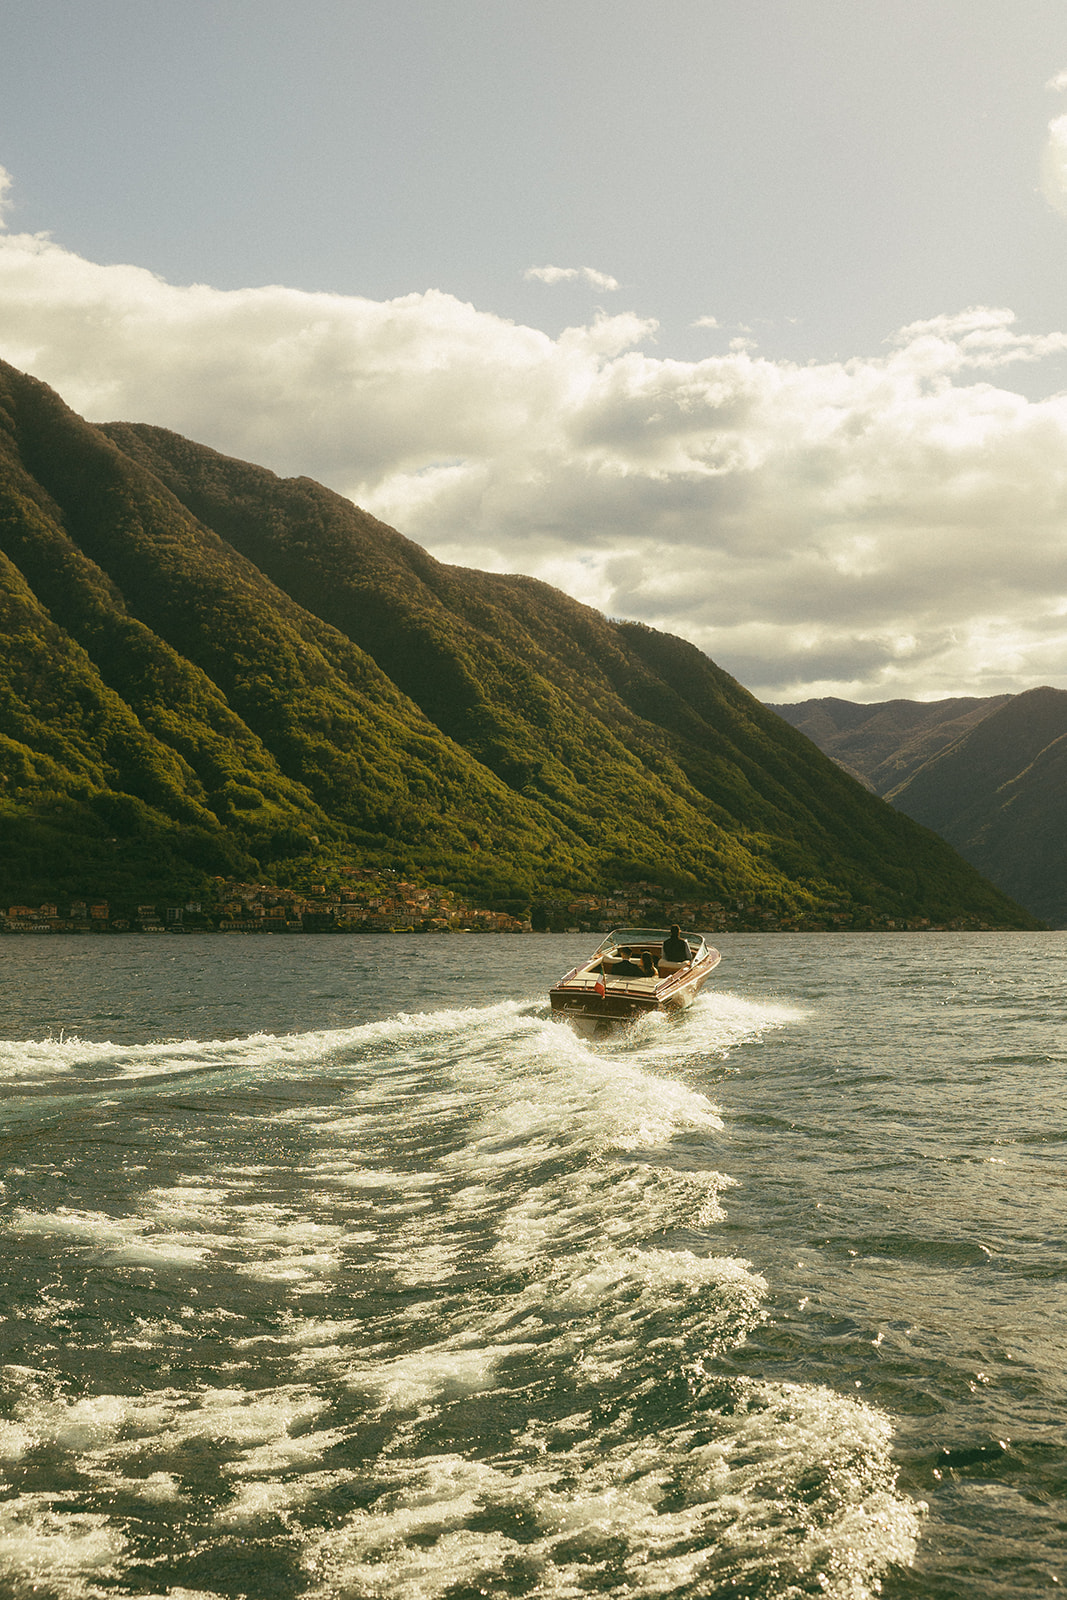 lake como italy wedding couple rides in boat